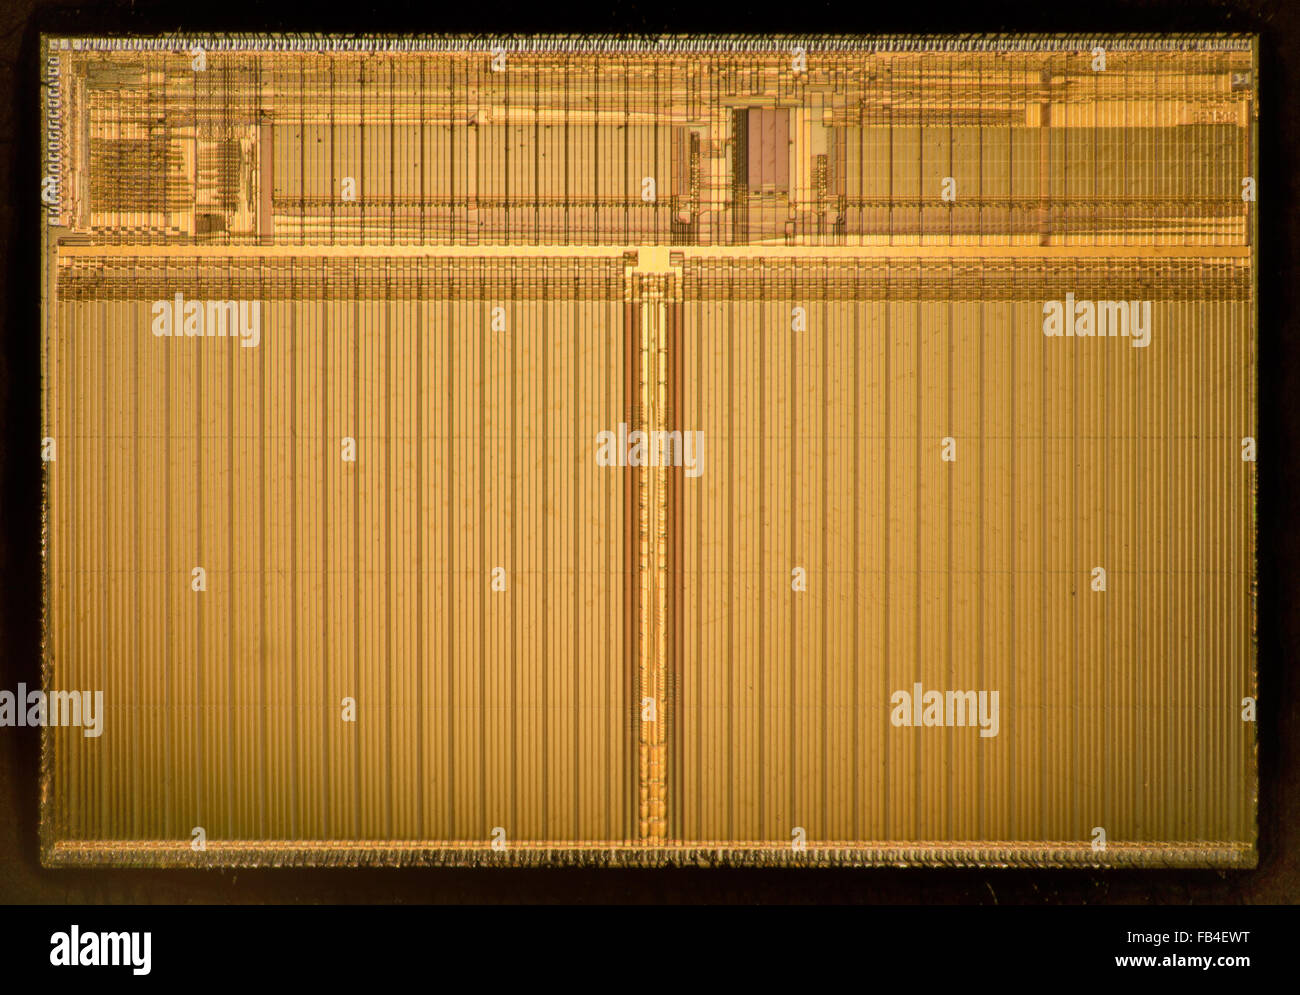 Estructura interna de CPU Pentium Pro detalle Foto de stock